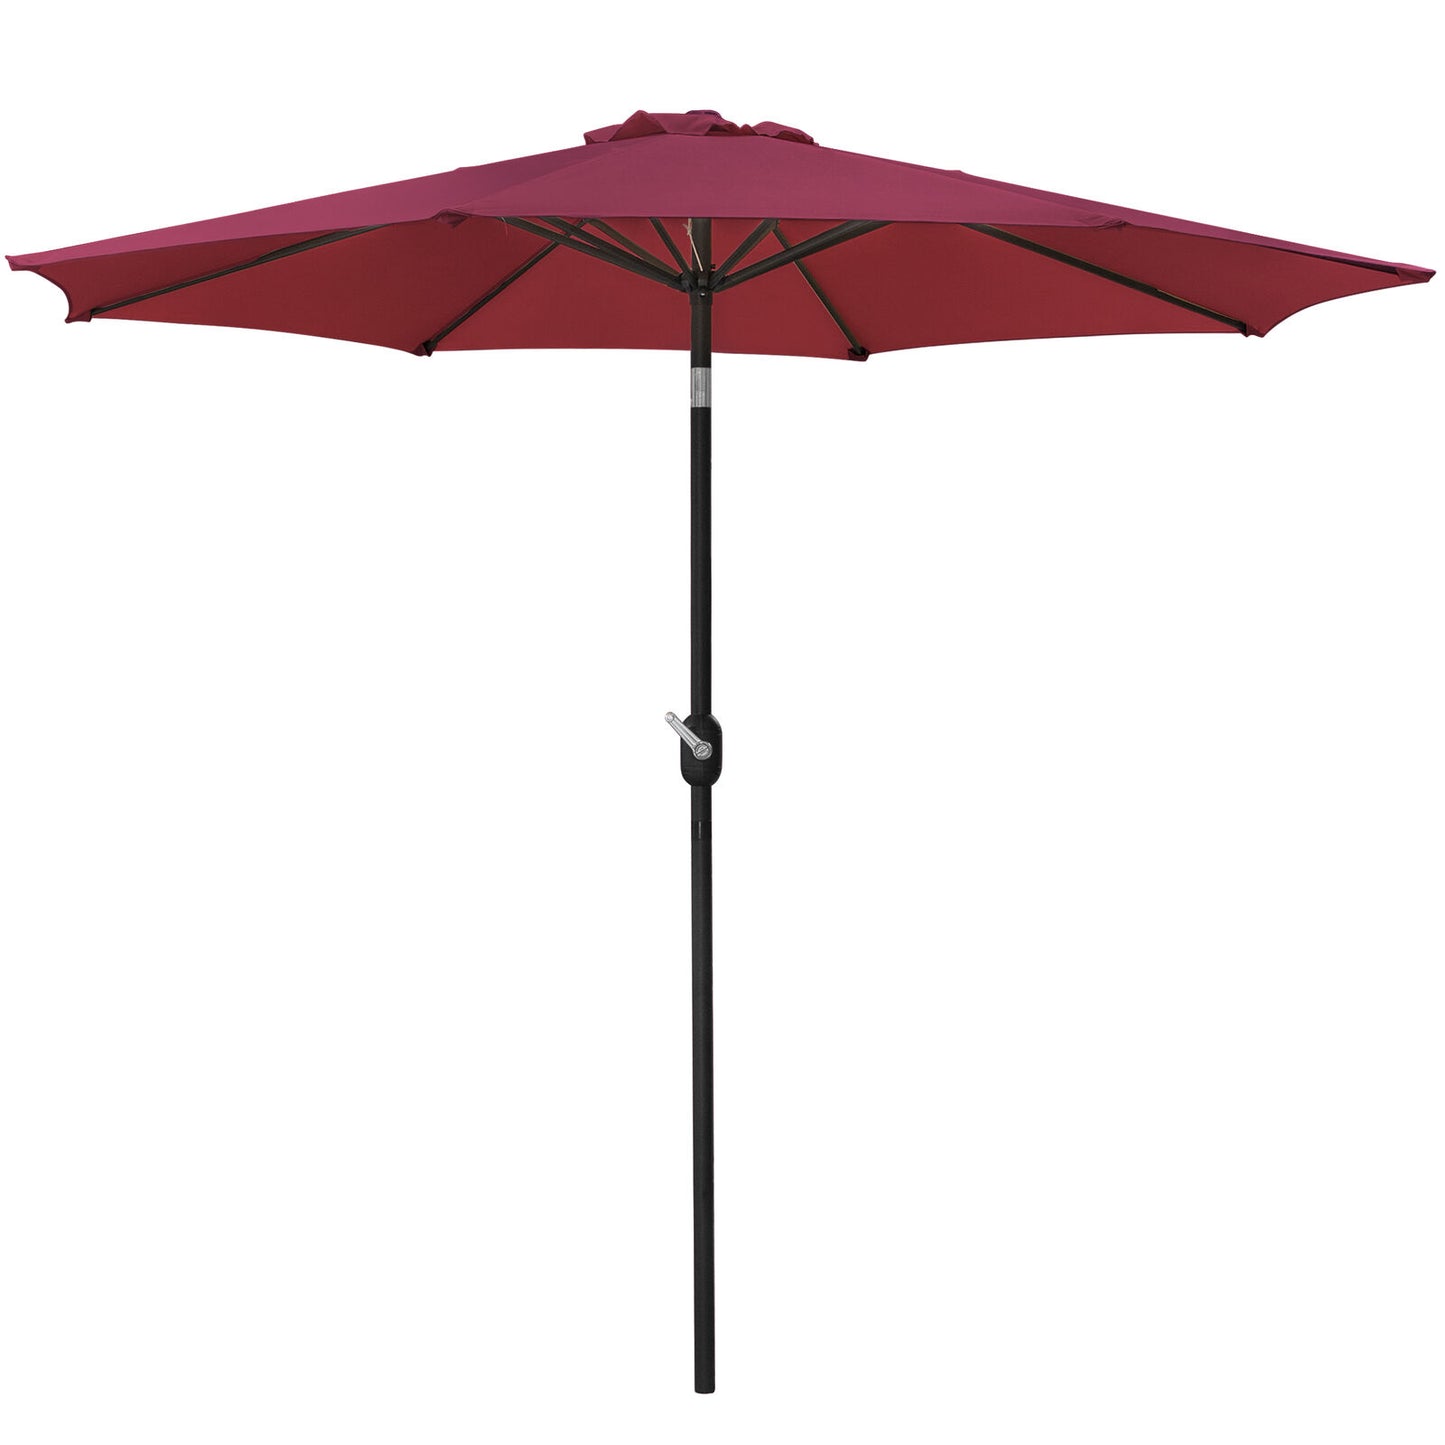 Red Patio 9ft Umbrella Outdoor Market Table Umbrella with Push Button Tilt Crank